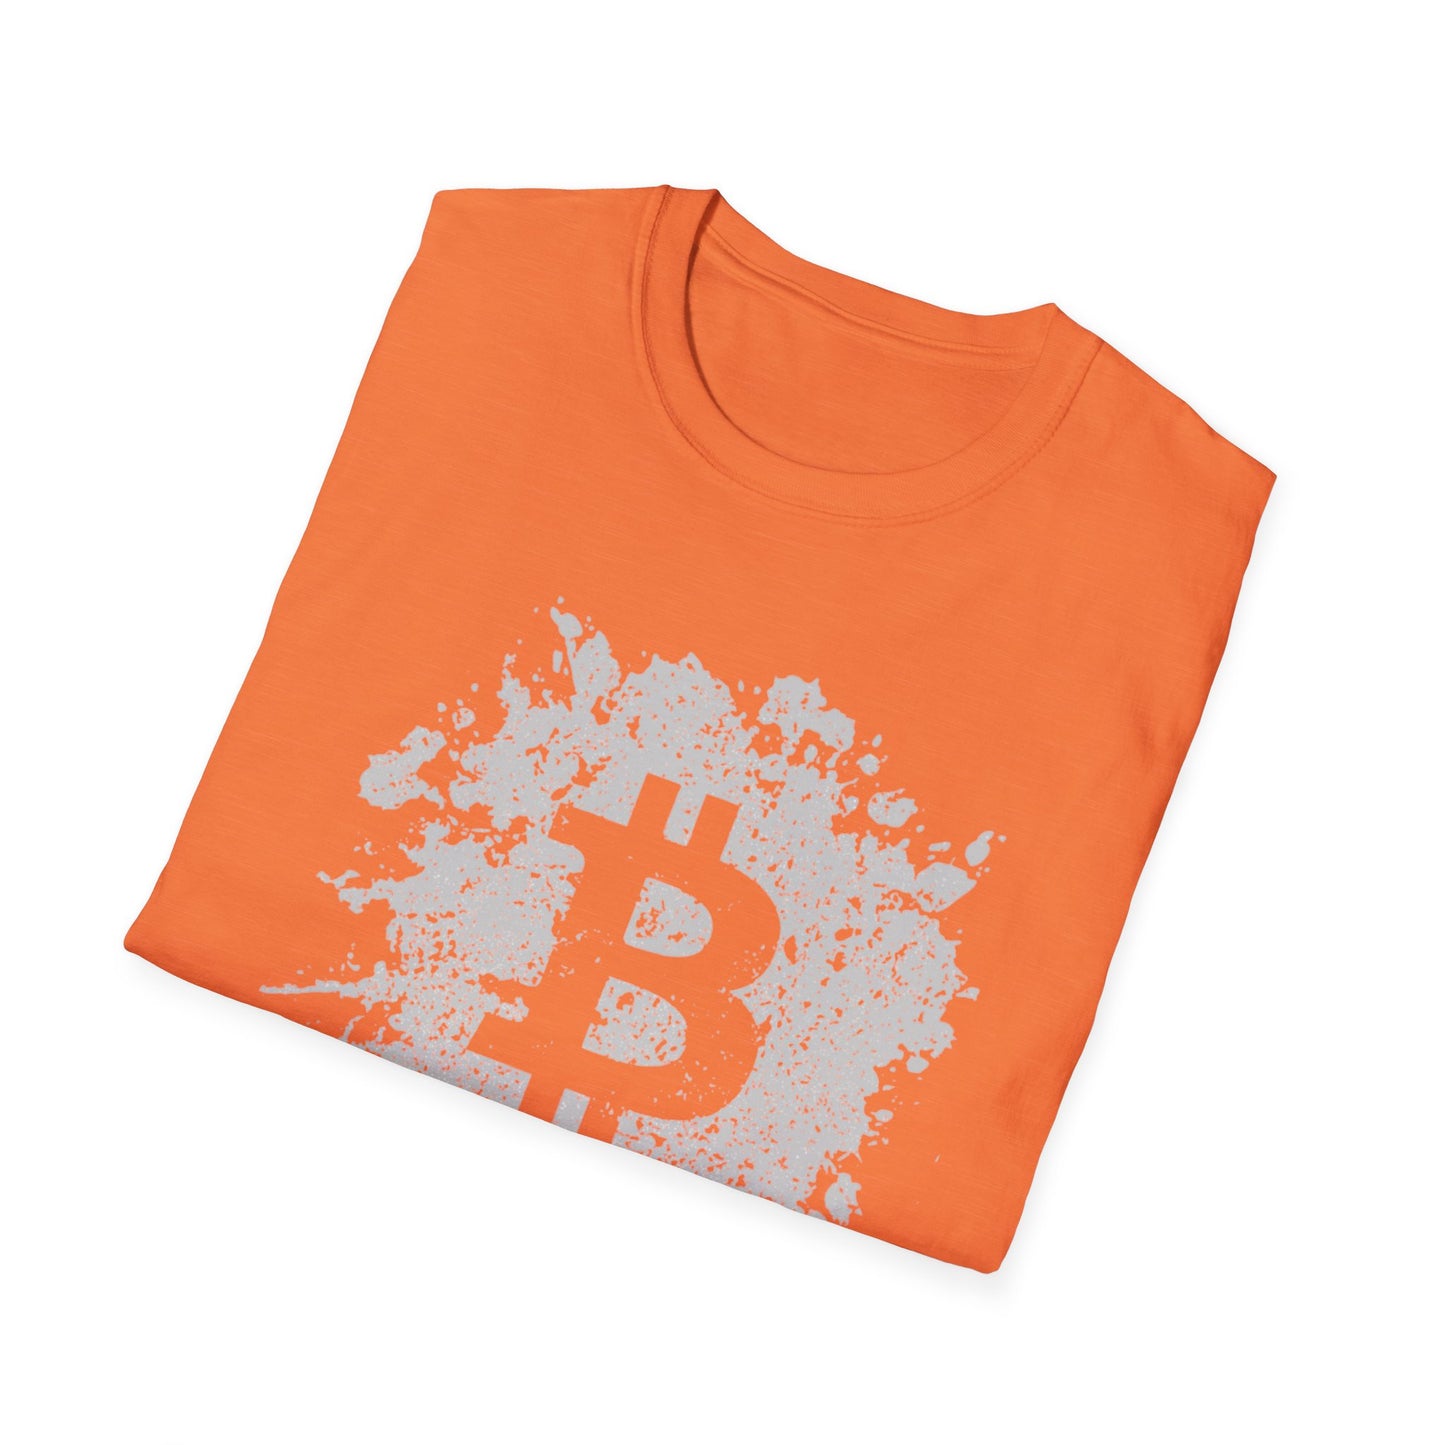 Bitcoin 'ATH' Achievement Unisex T-Shirt - Soft Ring-Spun Cotton - Crypto Enthusiasts Tee